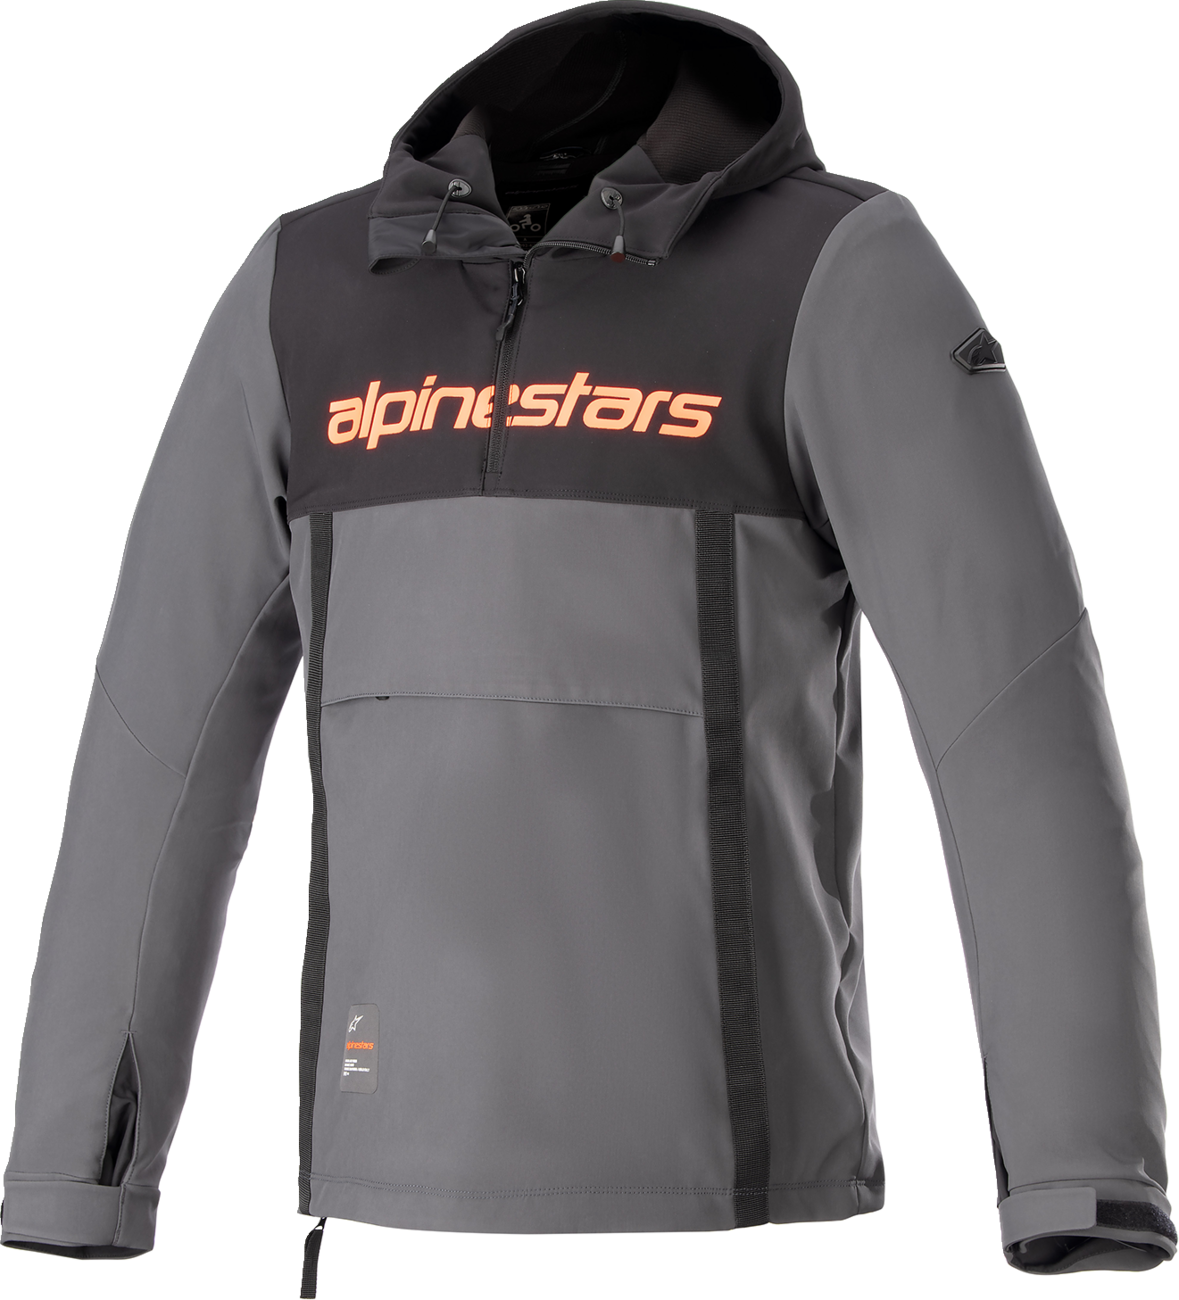 ALPINESTARS Sherpa Jacket - Black/Gray - XL 4208123-1134-XL